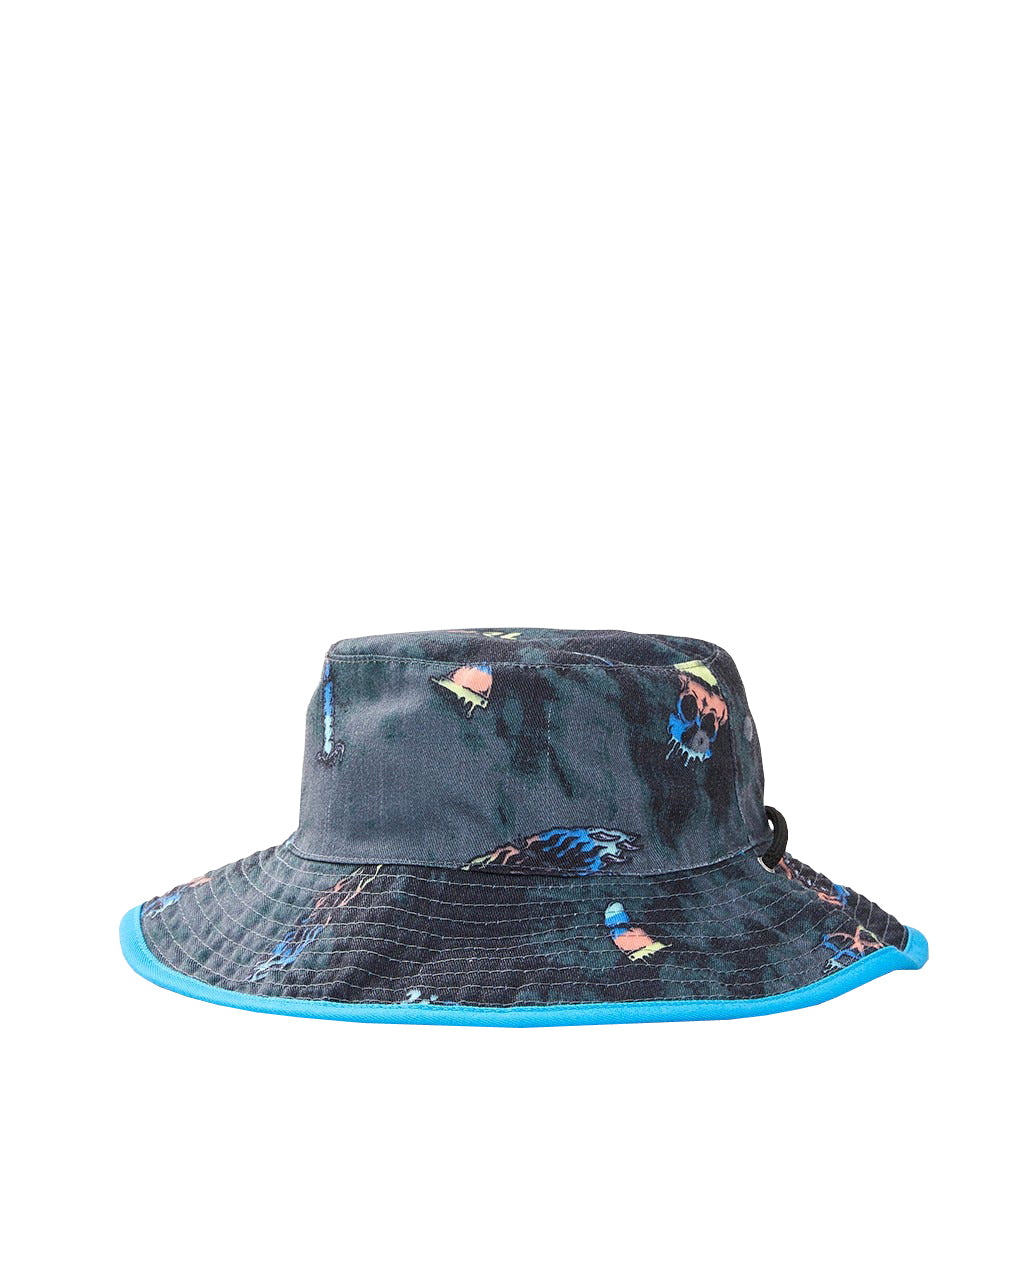 Rip Curl Boys Reversible Valley Mid Brim Hat